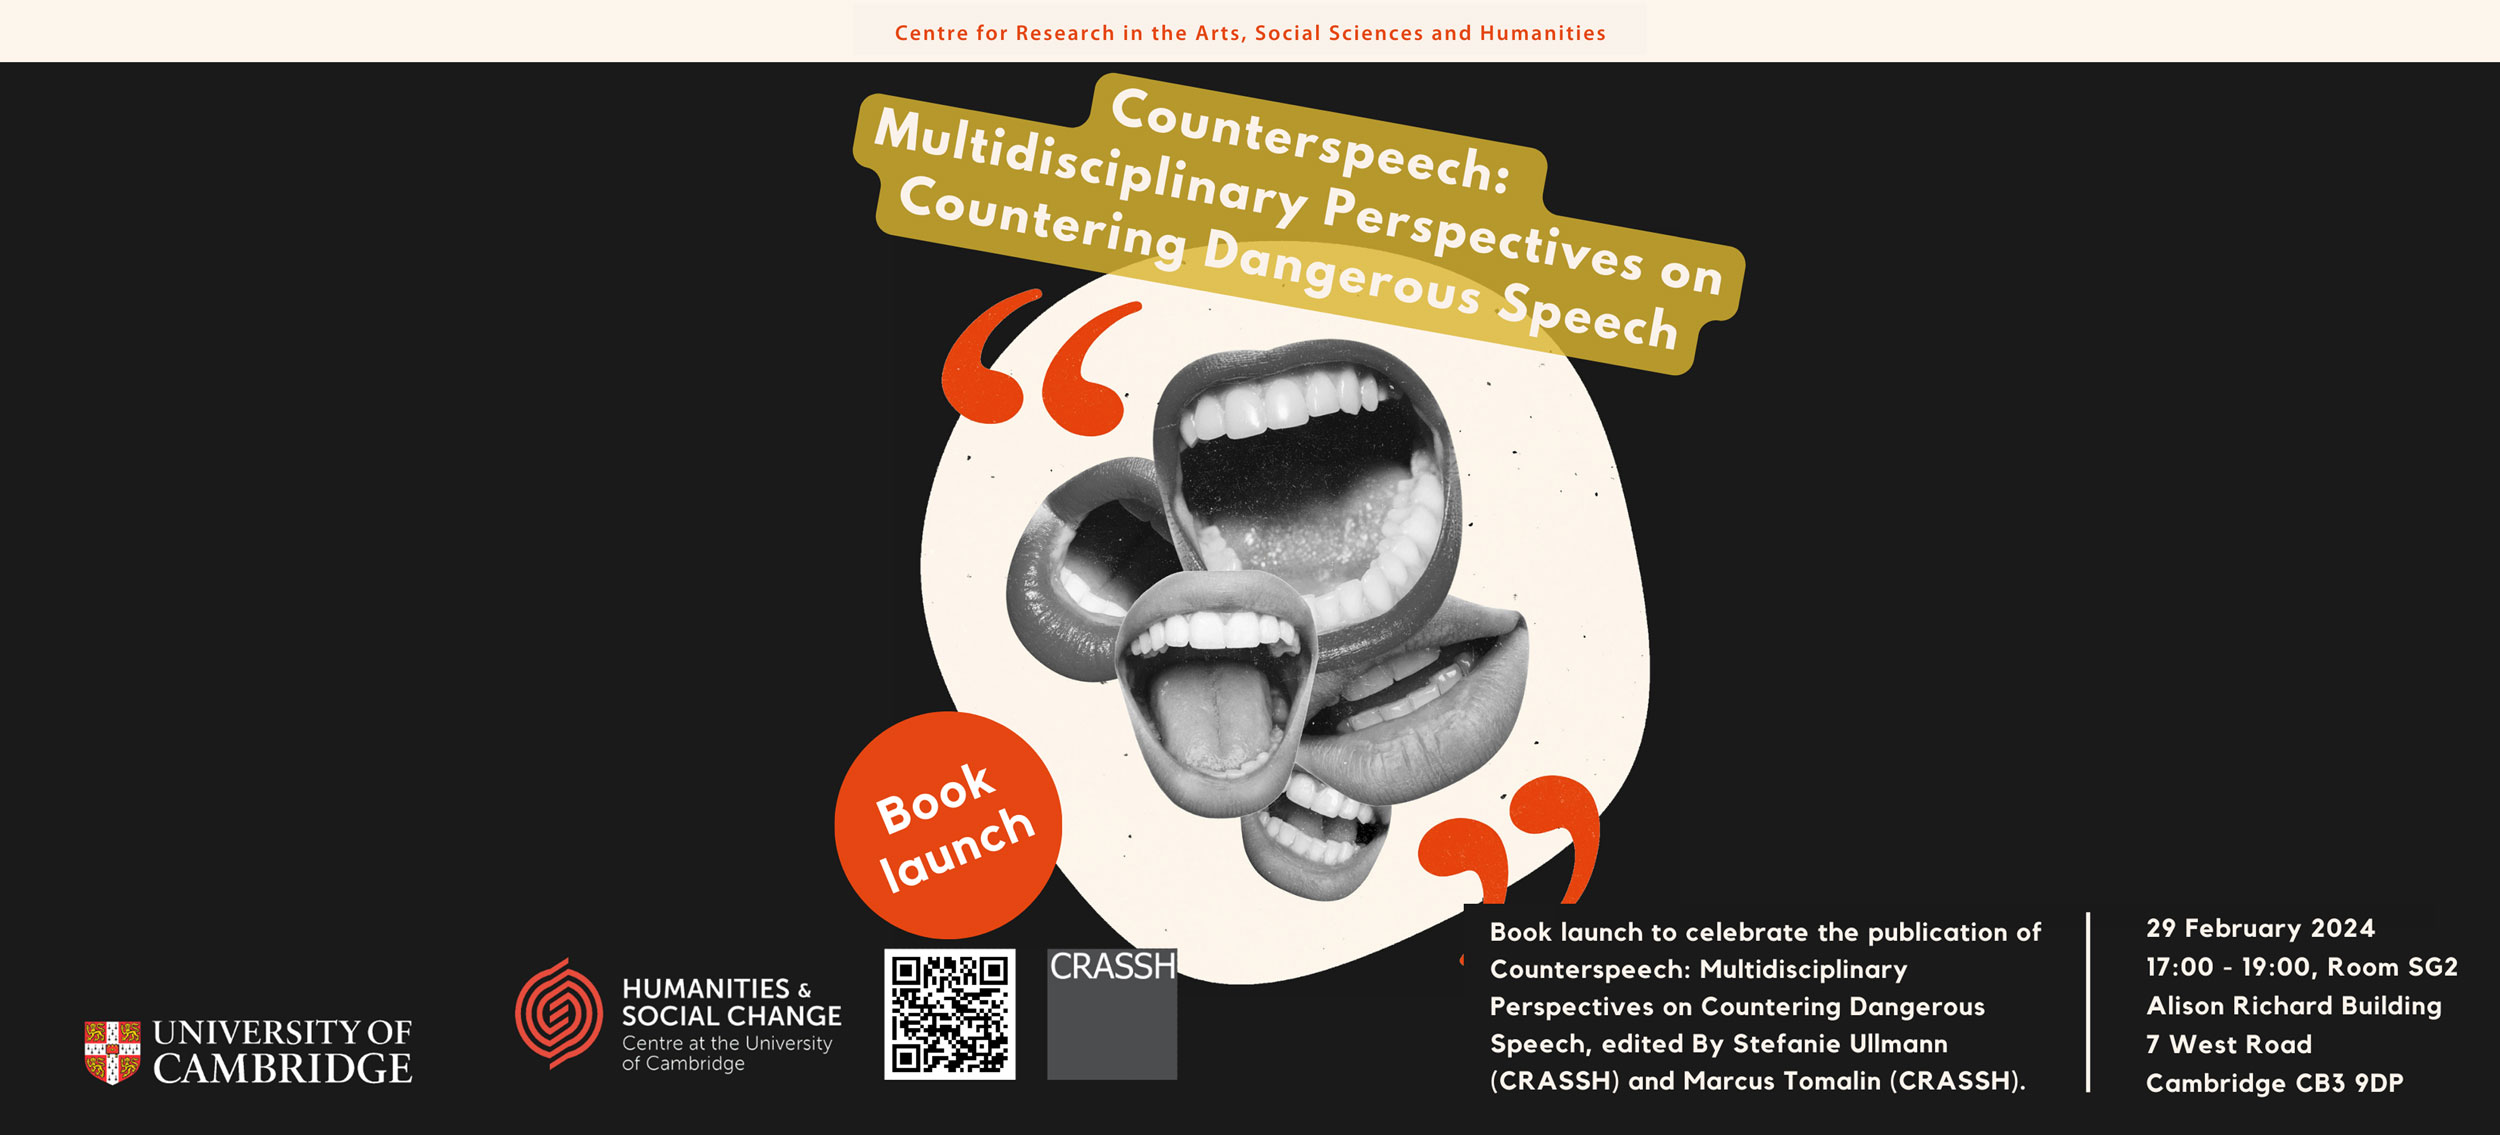 Booklaunch: Counterspeech - Multidisciplinary Perspectives on Countering Dangerous Speech